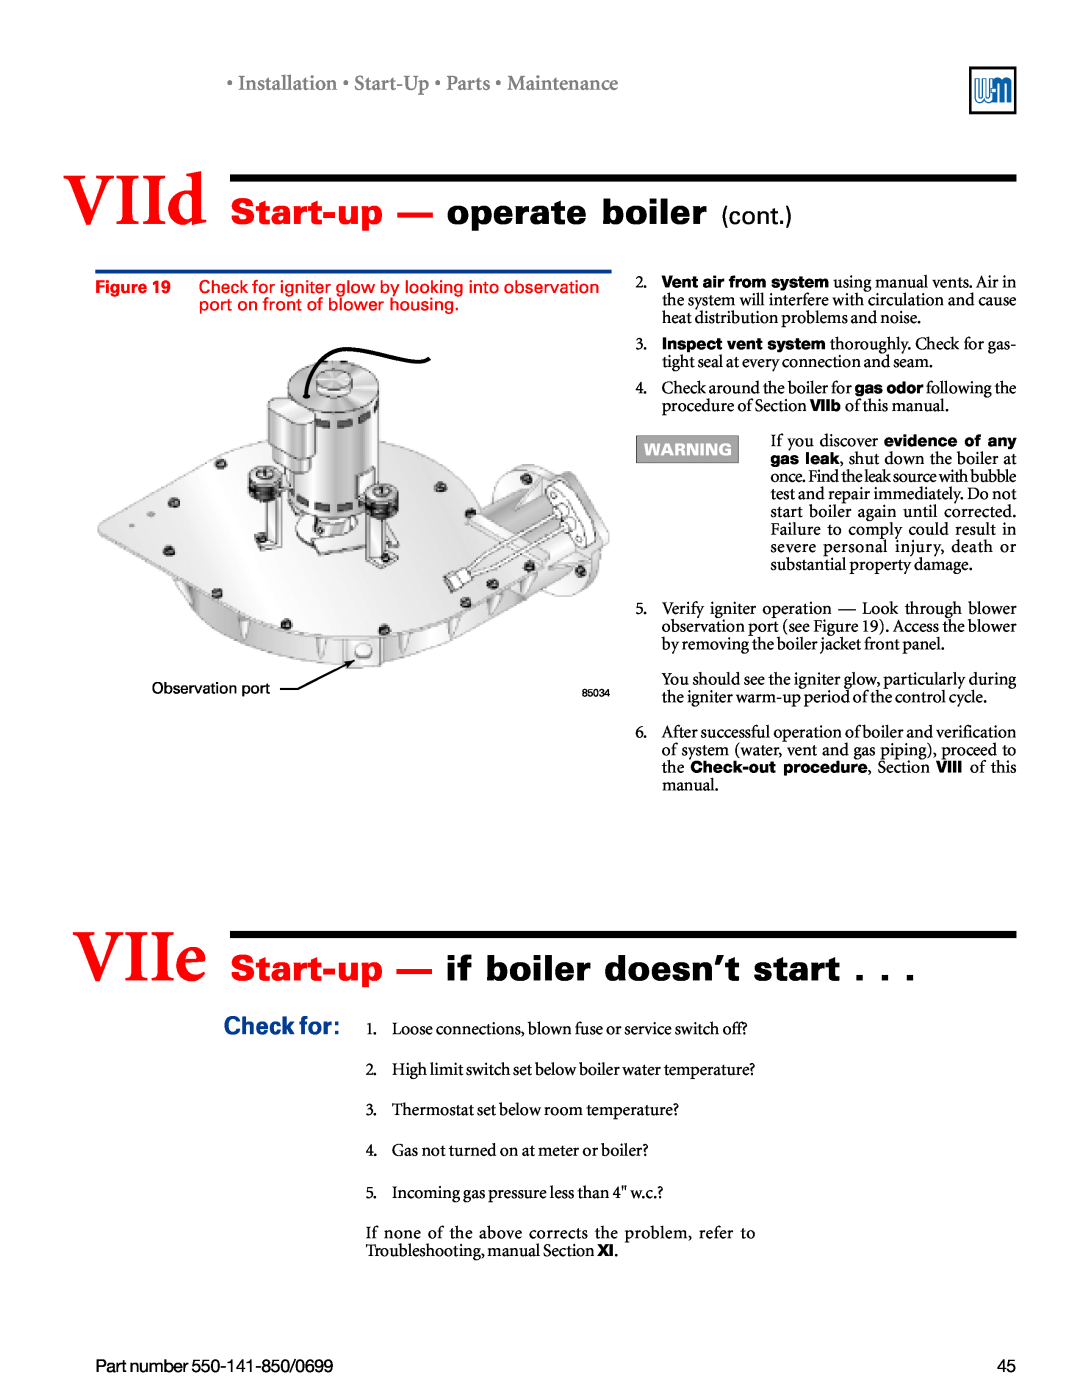 Weil-McLain 550-141-850/0599 manual VIId Start-up— operate boiler cont, VIIe Start-up— if boiler doesn’t start 